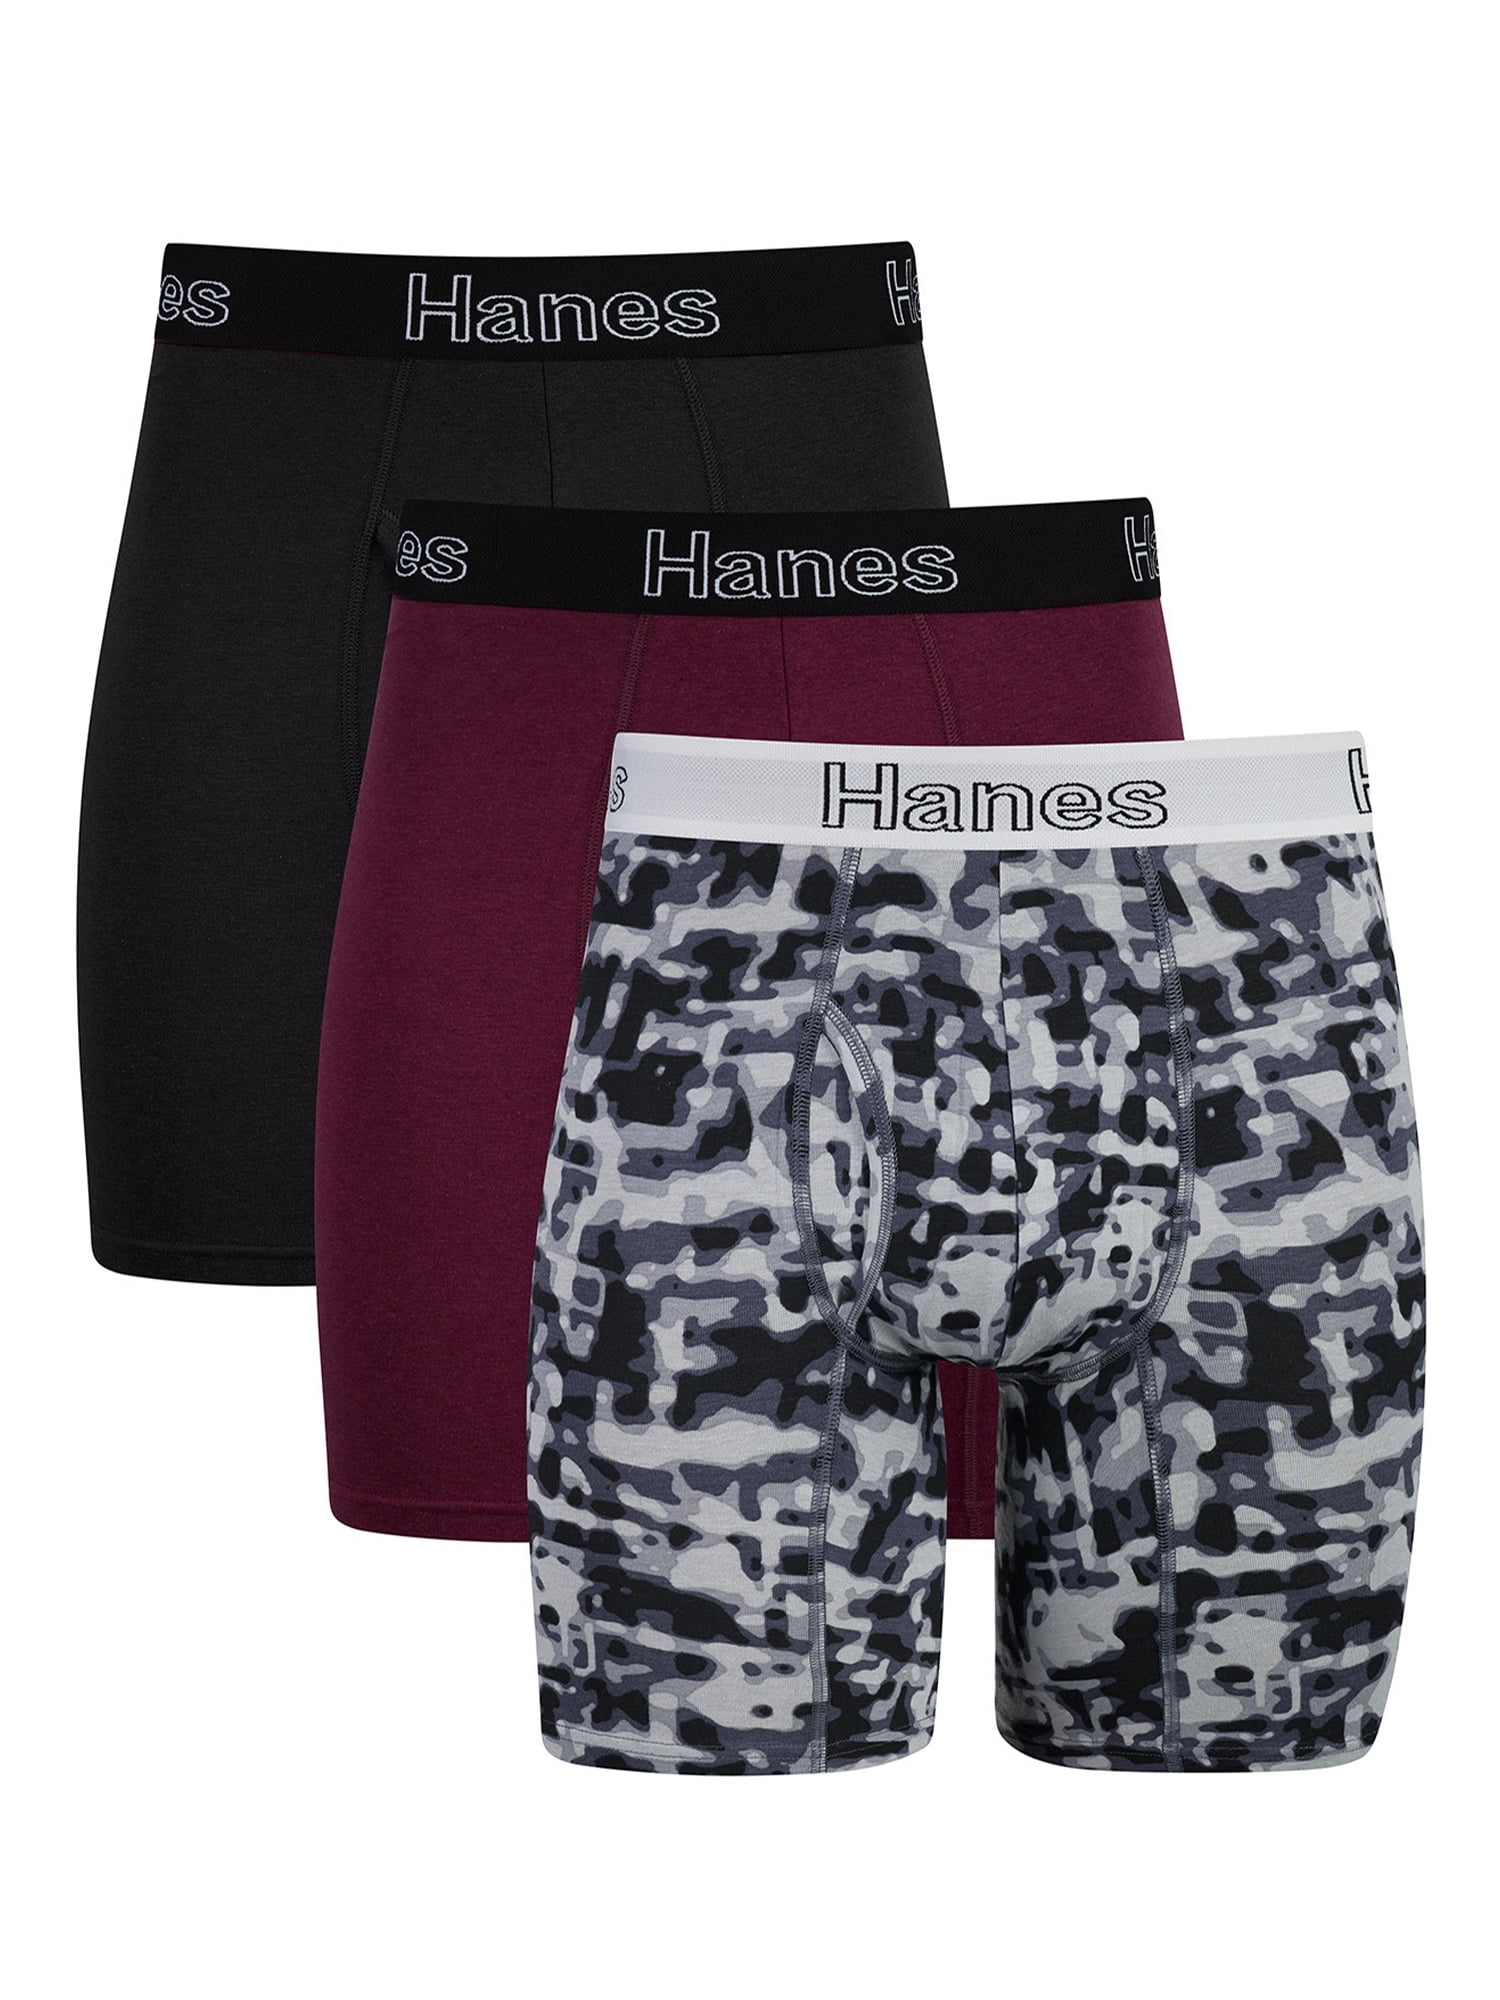 Hanes Boxer Briefs, Cool Dri Moisture-Wicking Underwear, Cotton No-Ride-up  for Men, Multi-Packs Available, 6 Pack - Assorted, 3XL price in Saudi  Arabia,  Saudi Arabia